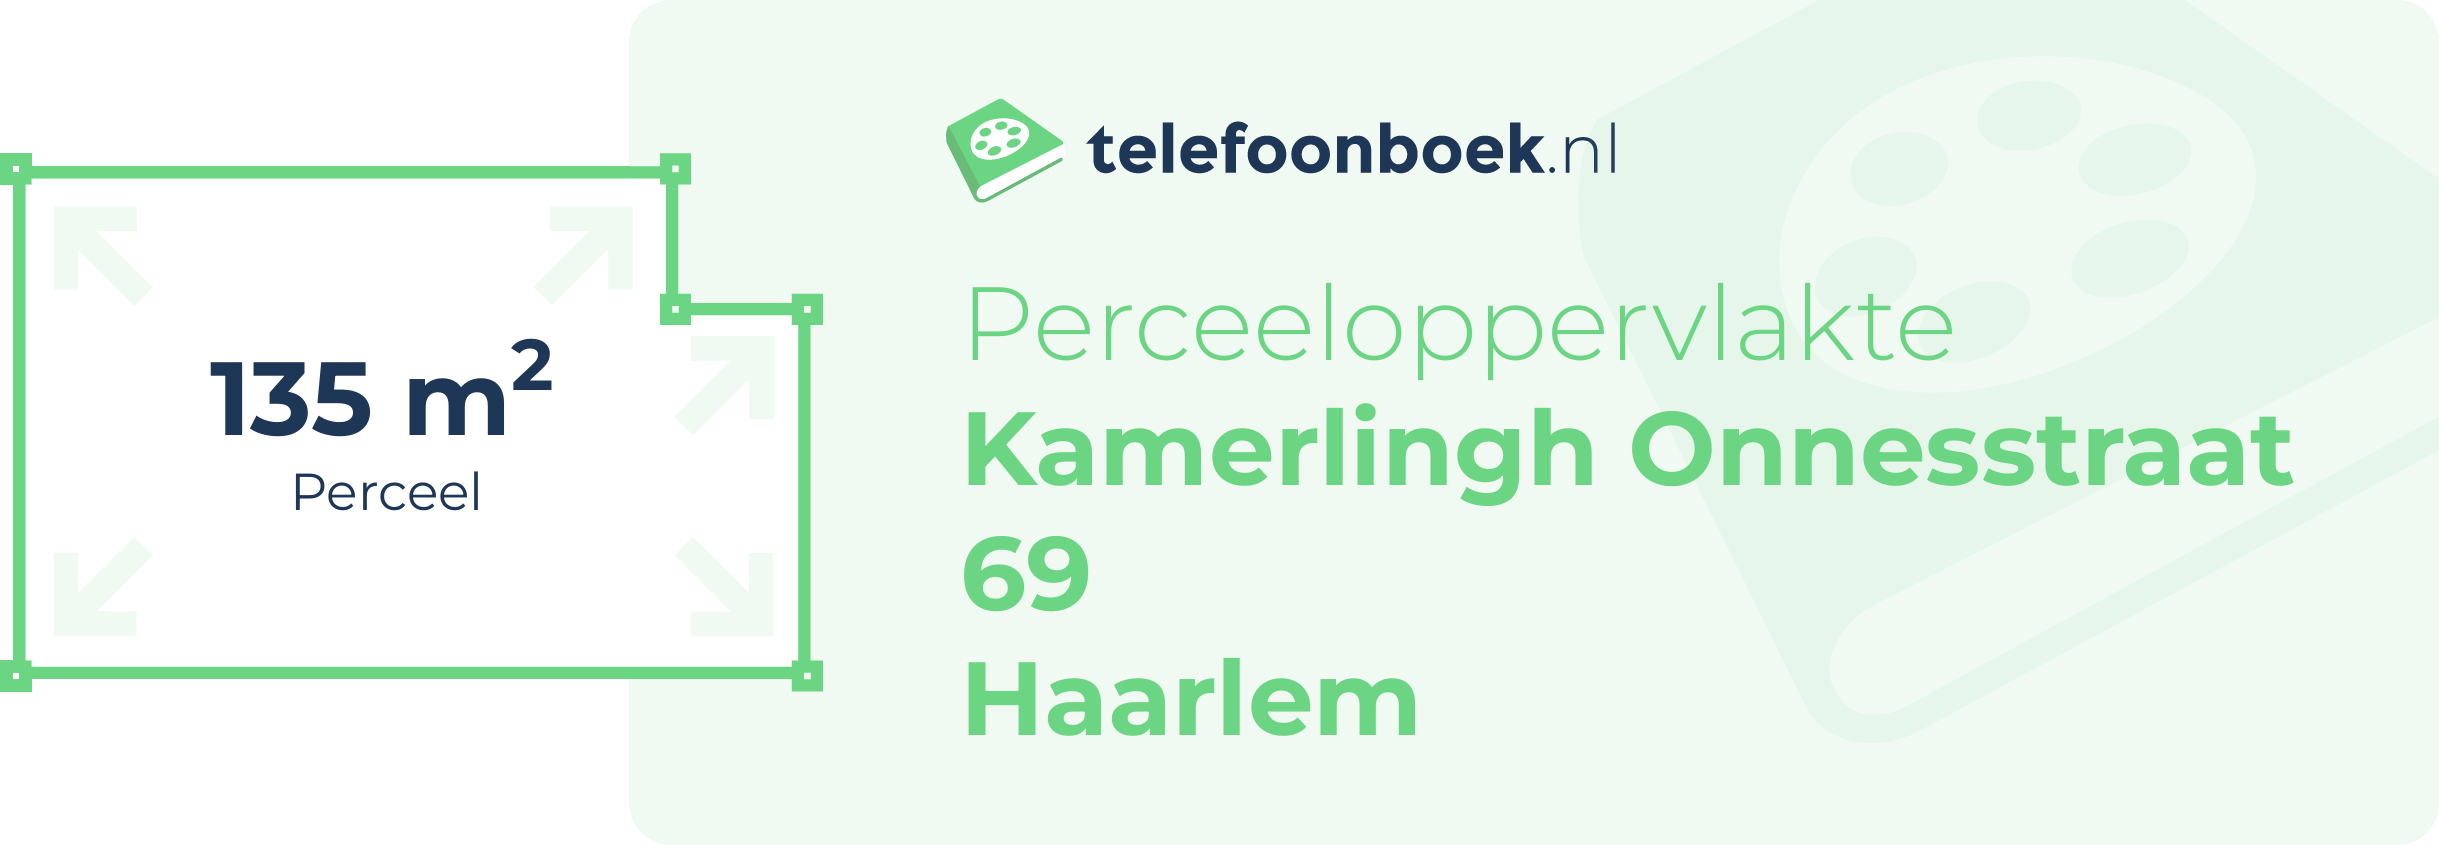 Perceeloppervlakte Kamerlingh Onnesstraat 69 Haarlem